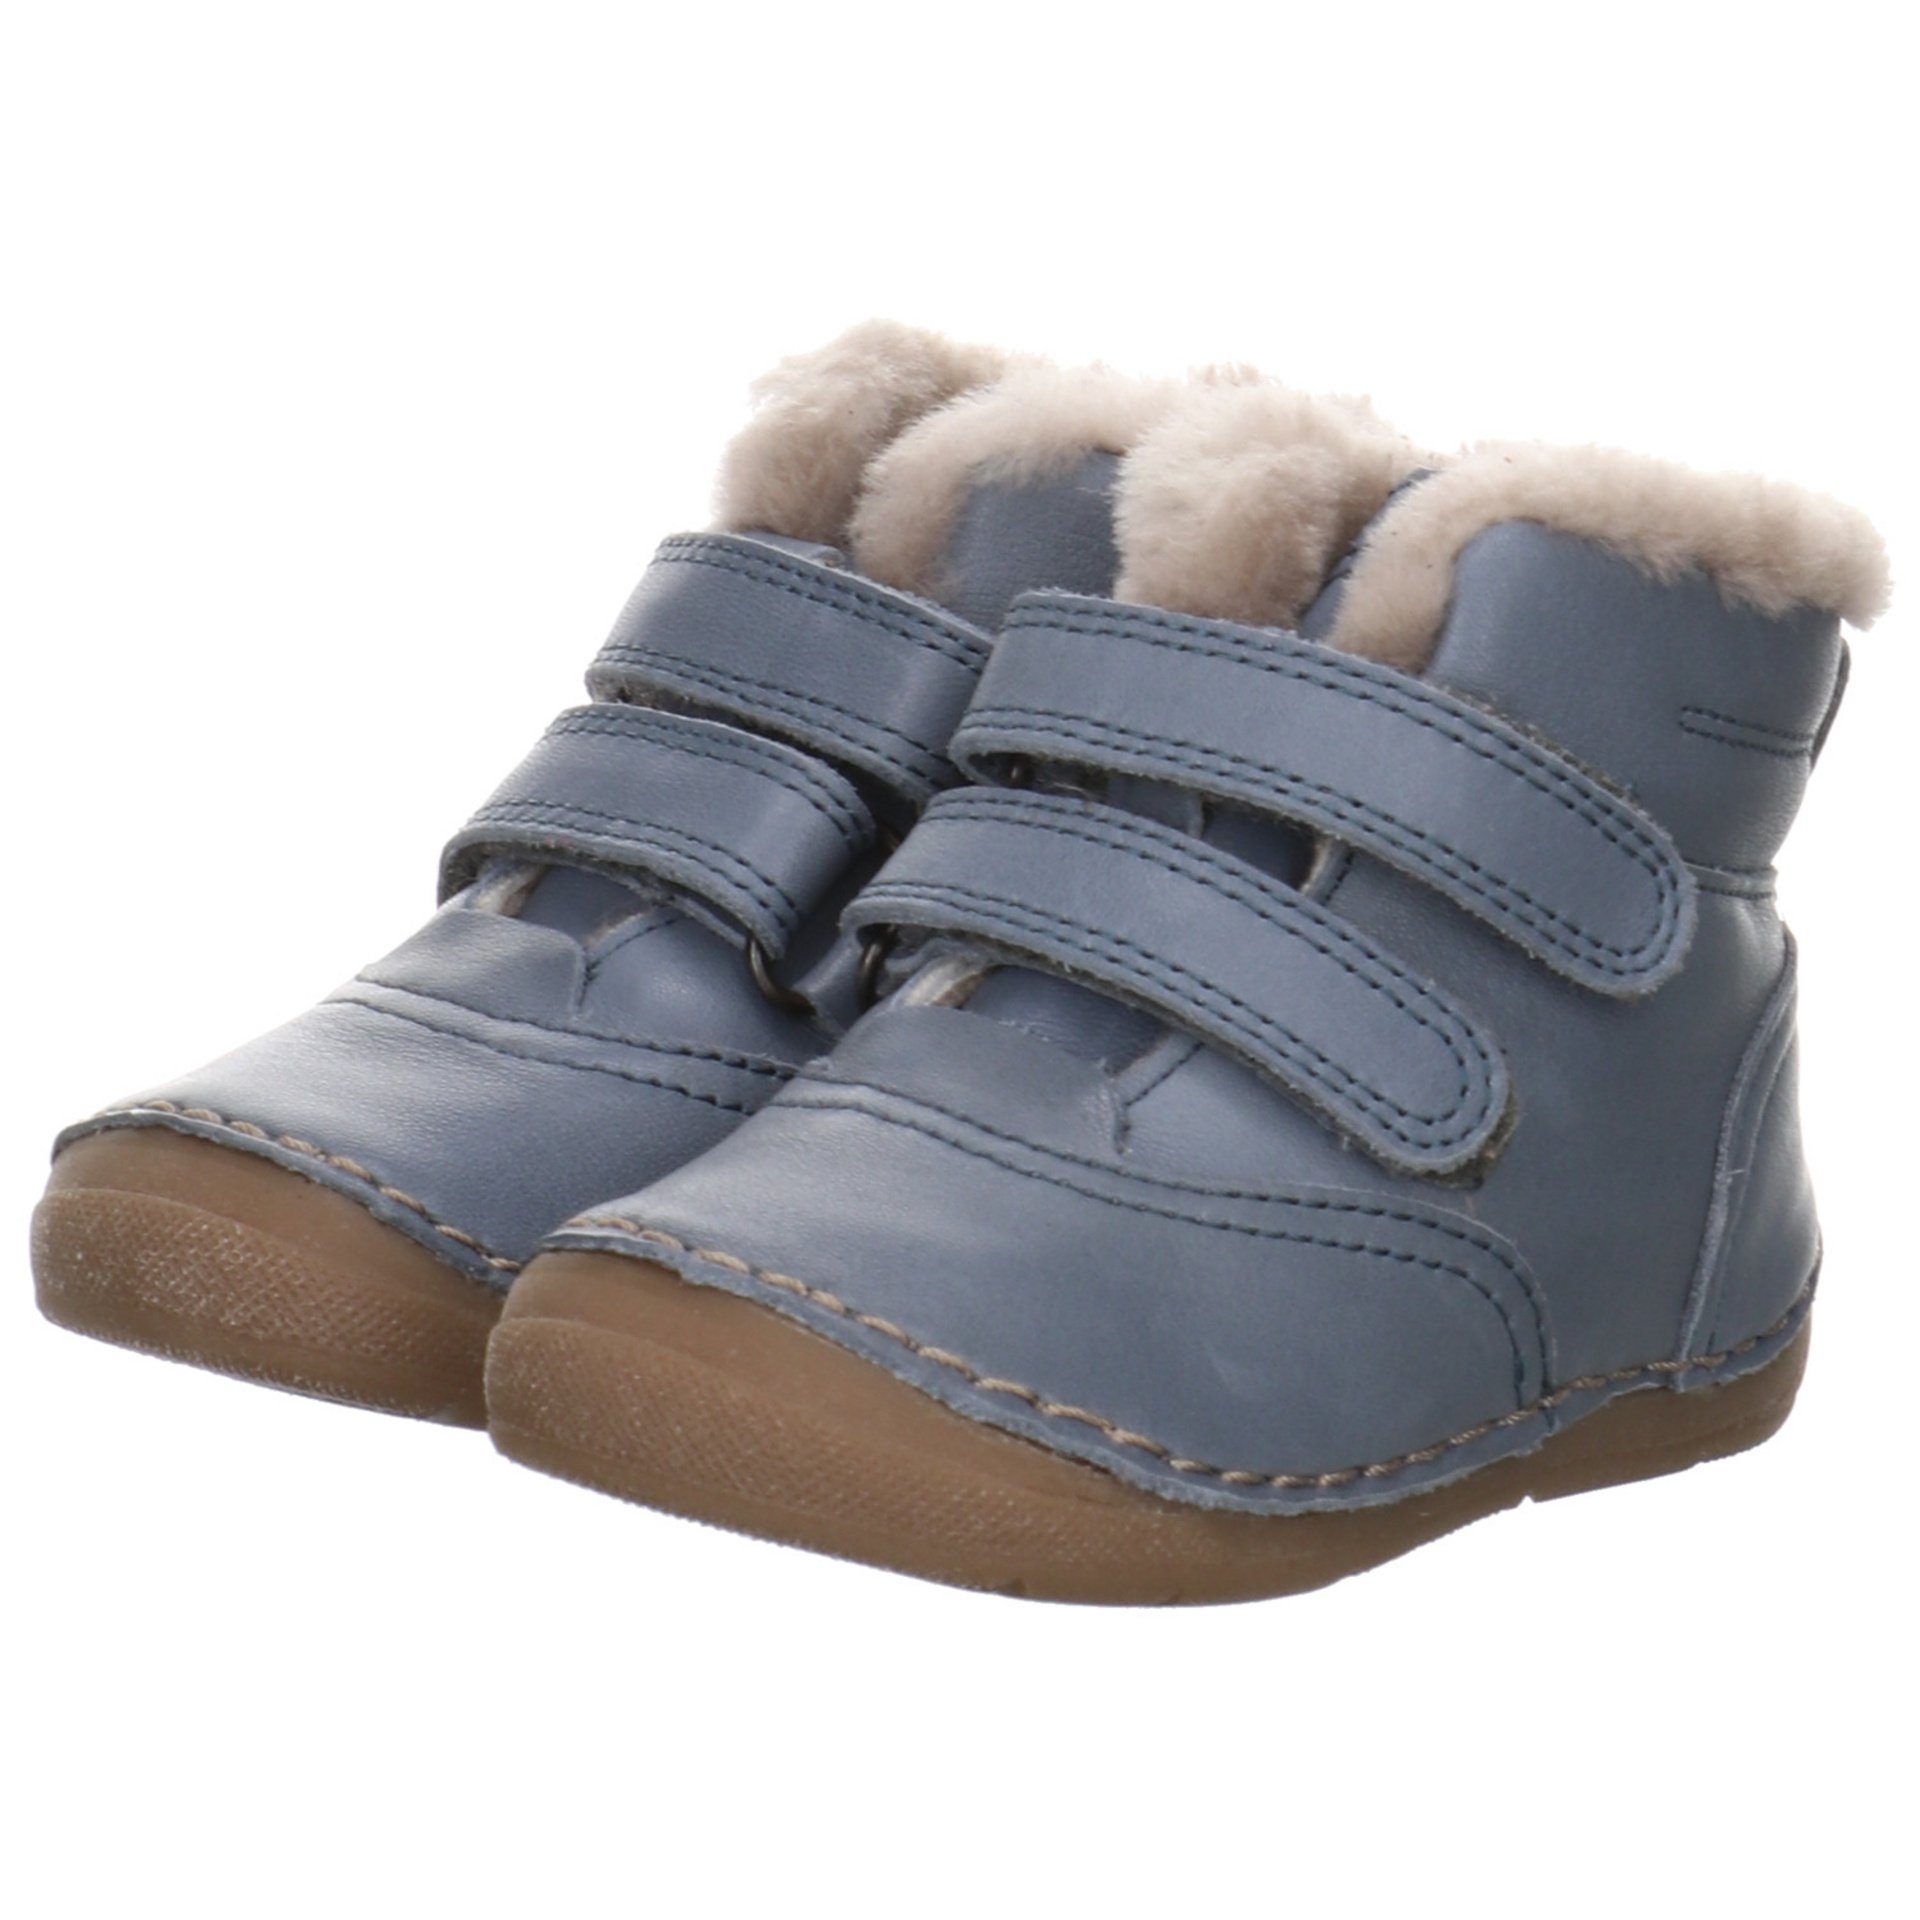 froddo® Baby blau-mittel Boots Lederkombination Stiefel Krabbelschuhe Lauflernschuhe Paix